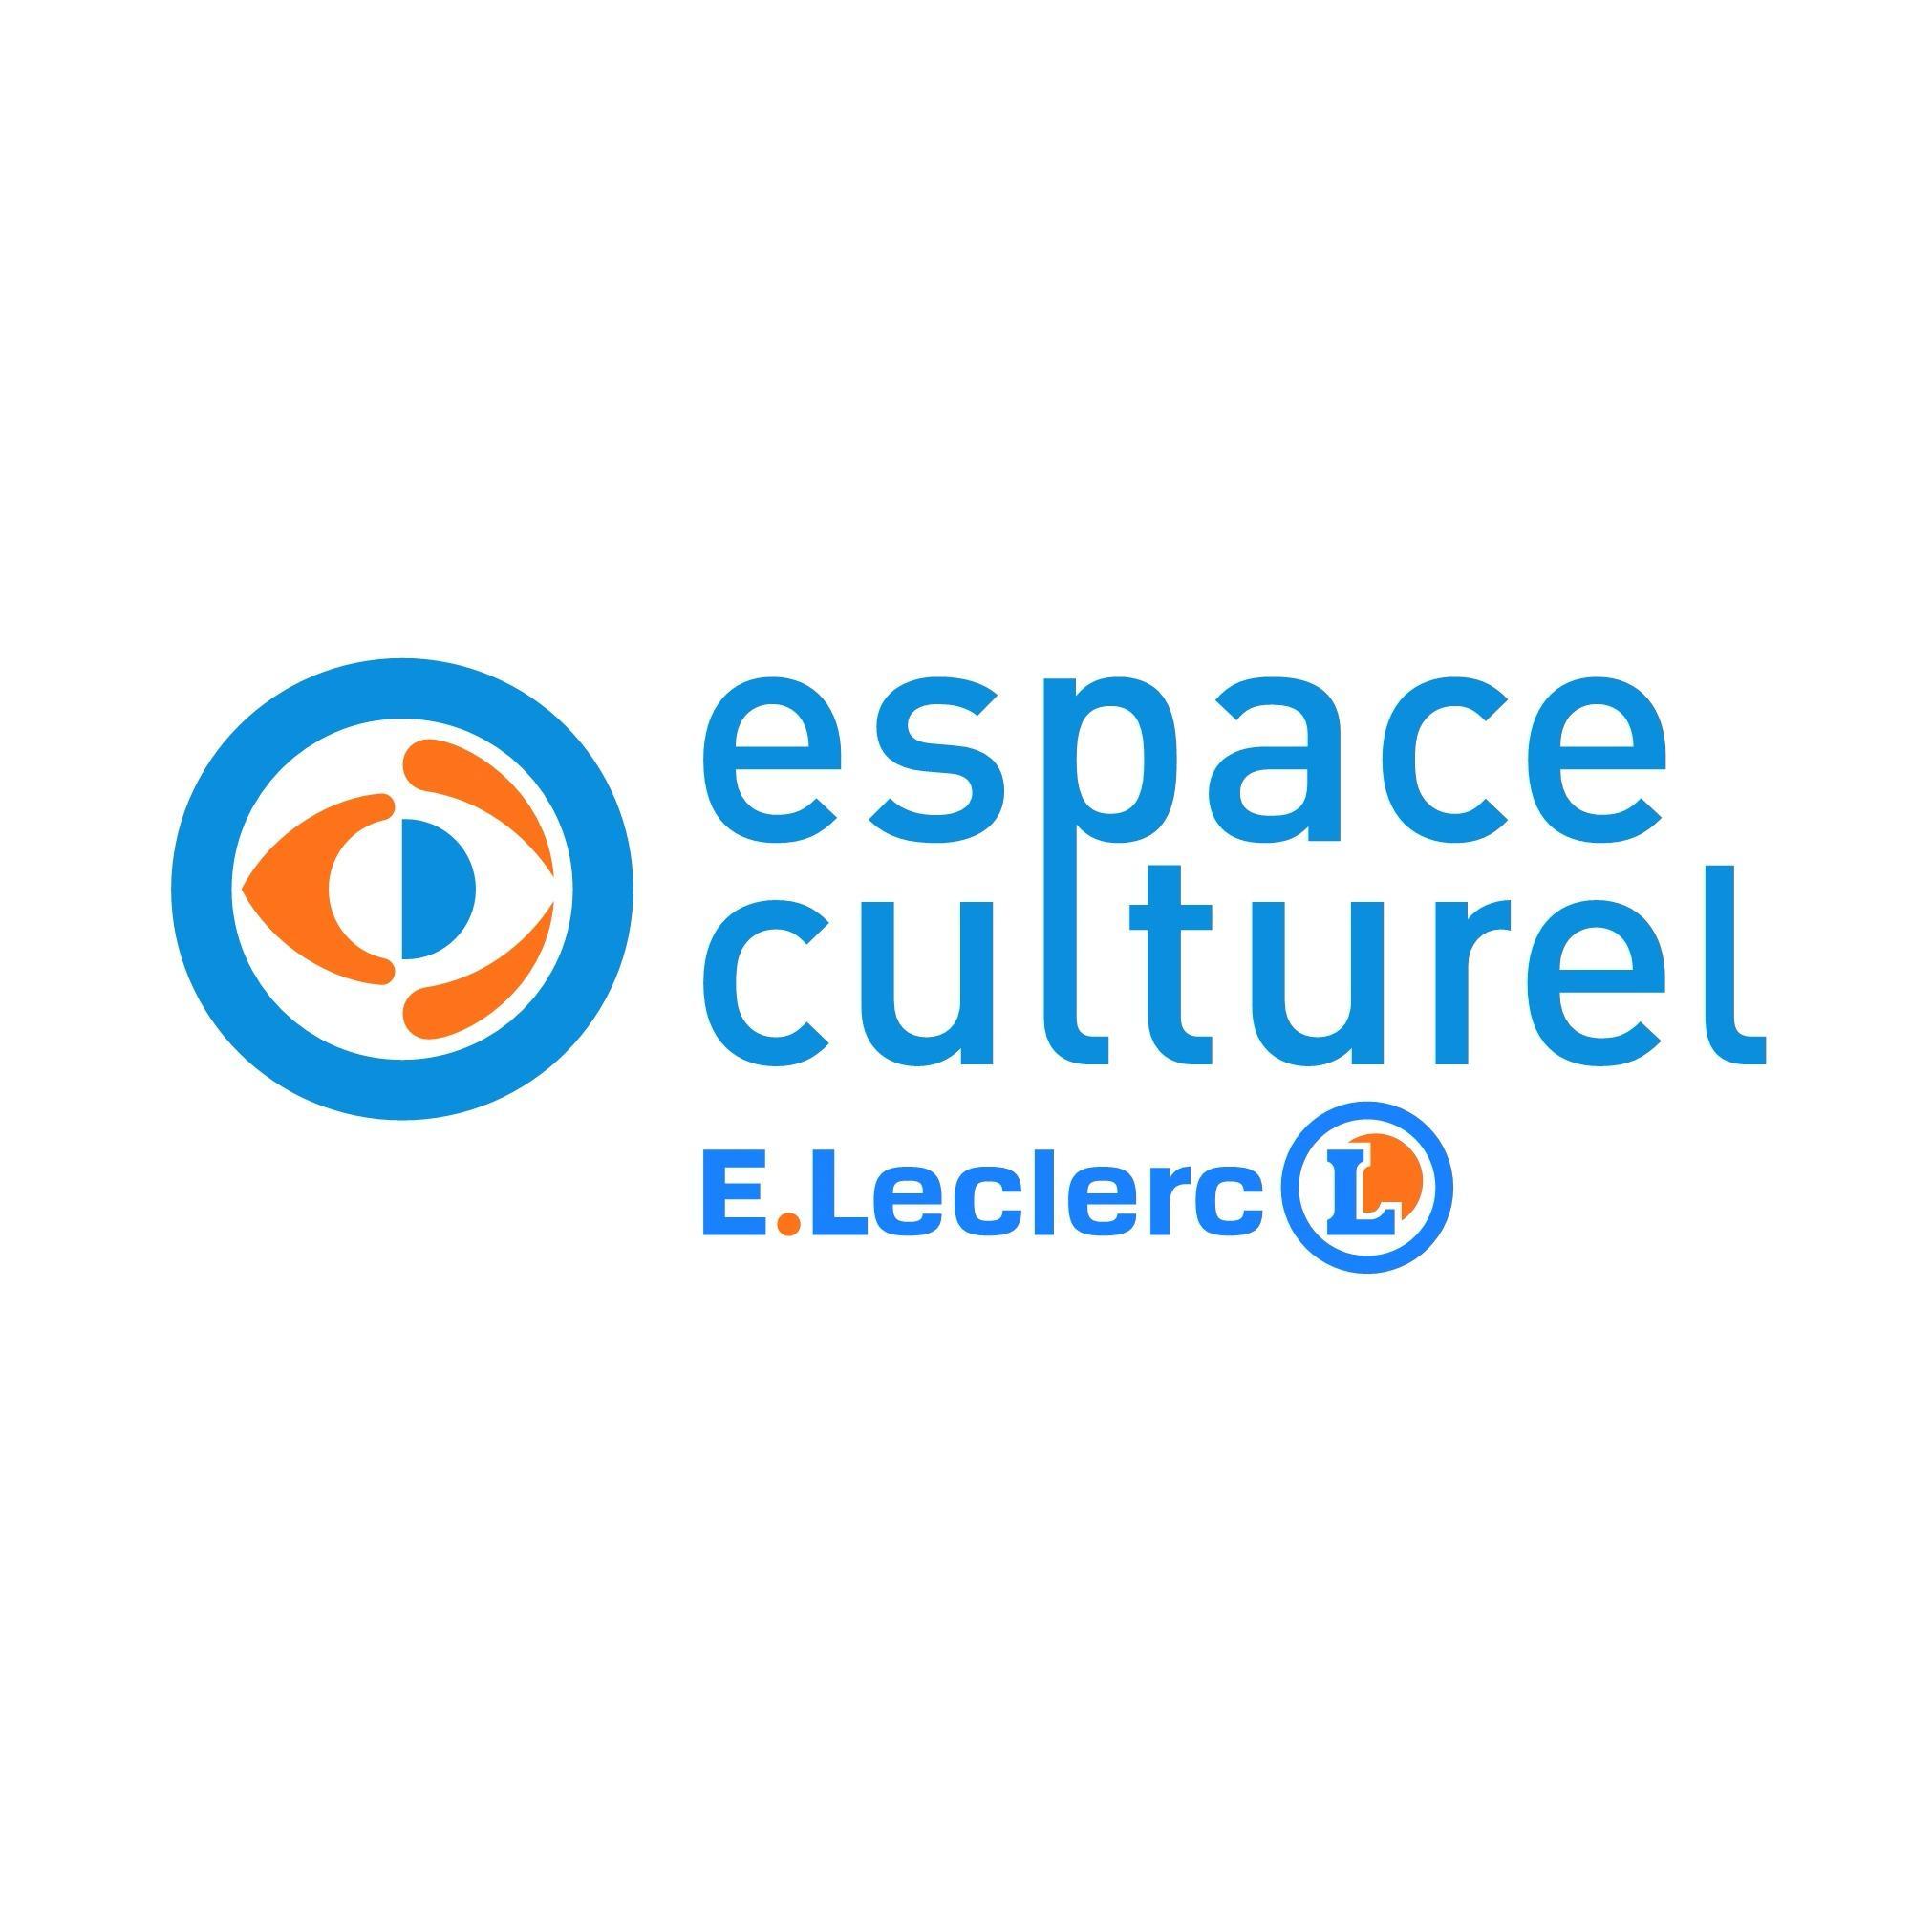 E.leclerc Espace Culturel Bourgoin Jallieu